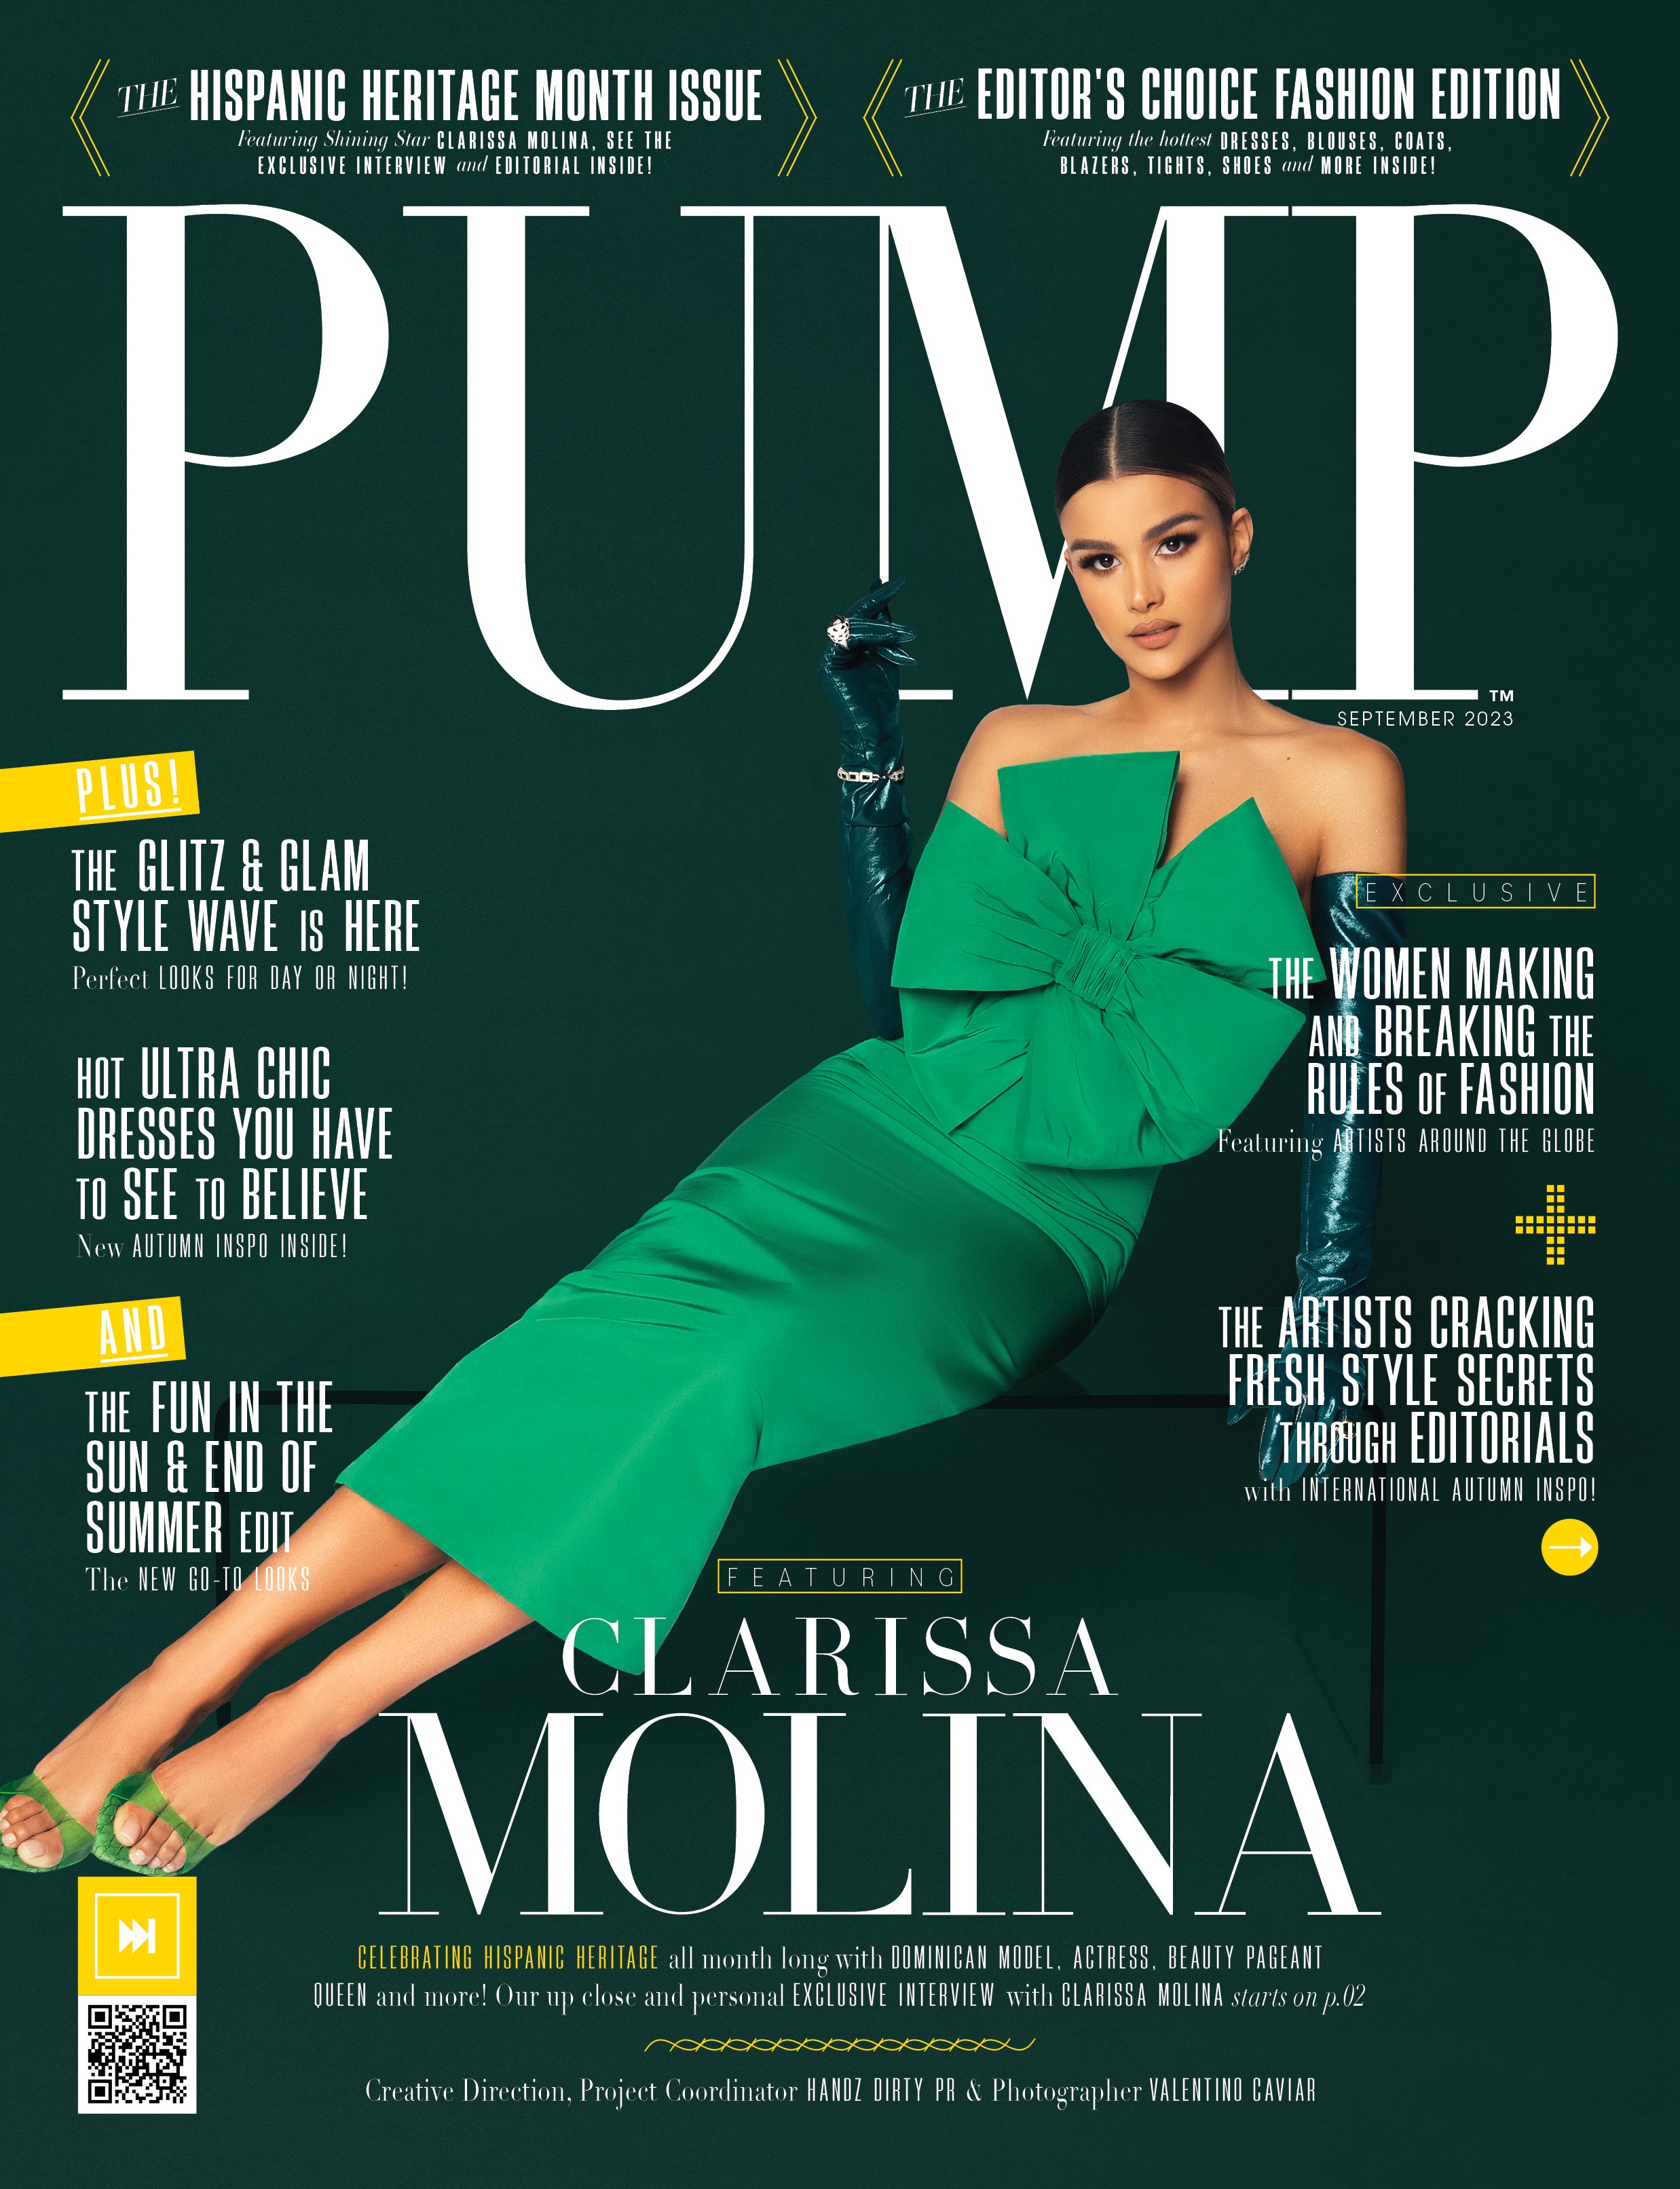 Clarissa Molina pagina web - noticia - pump